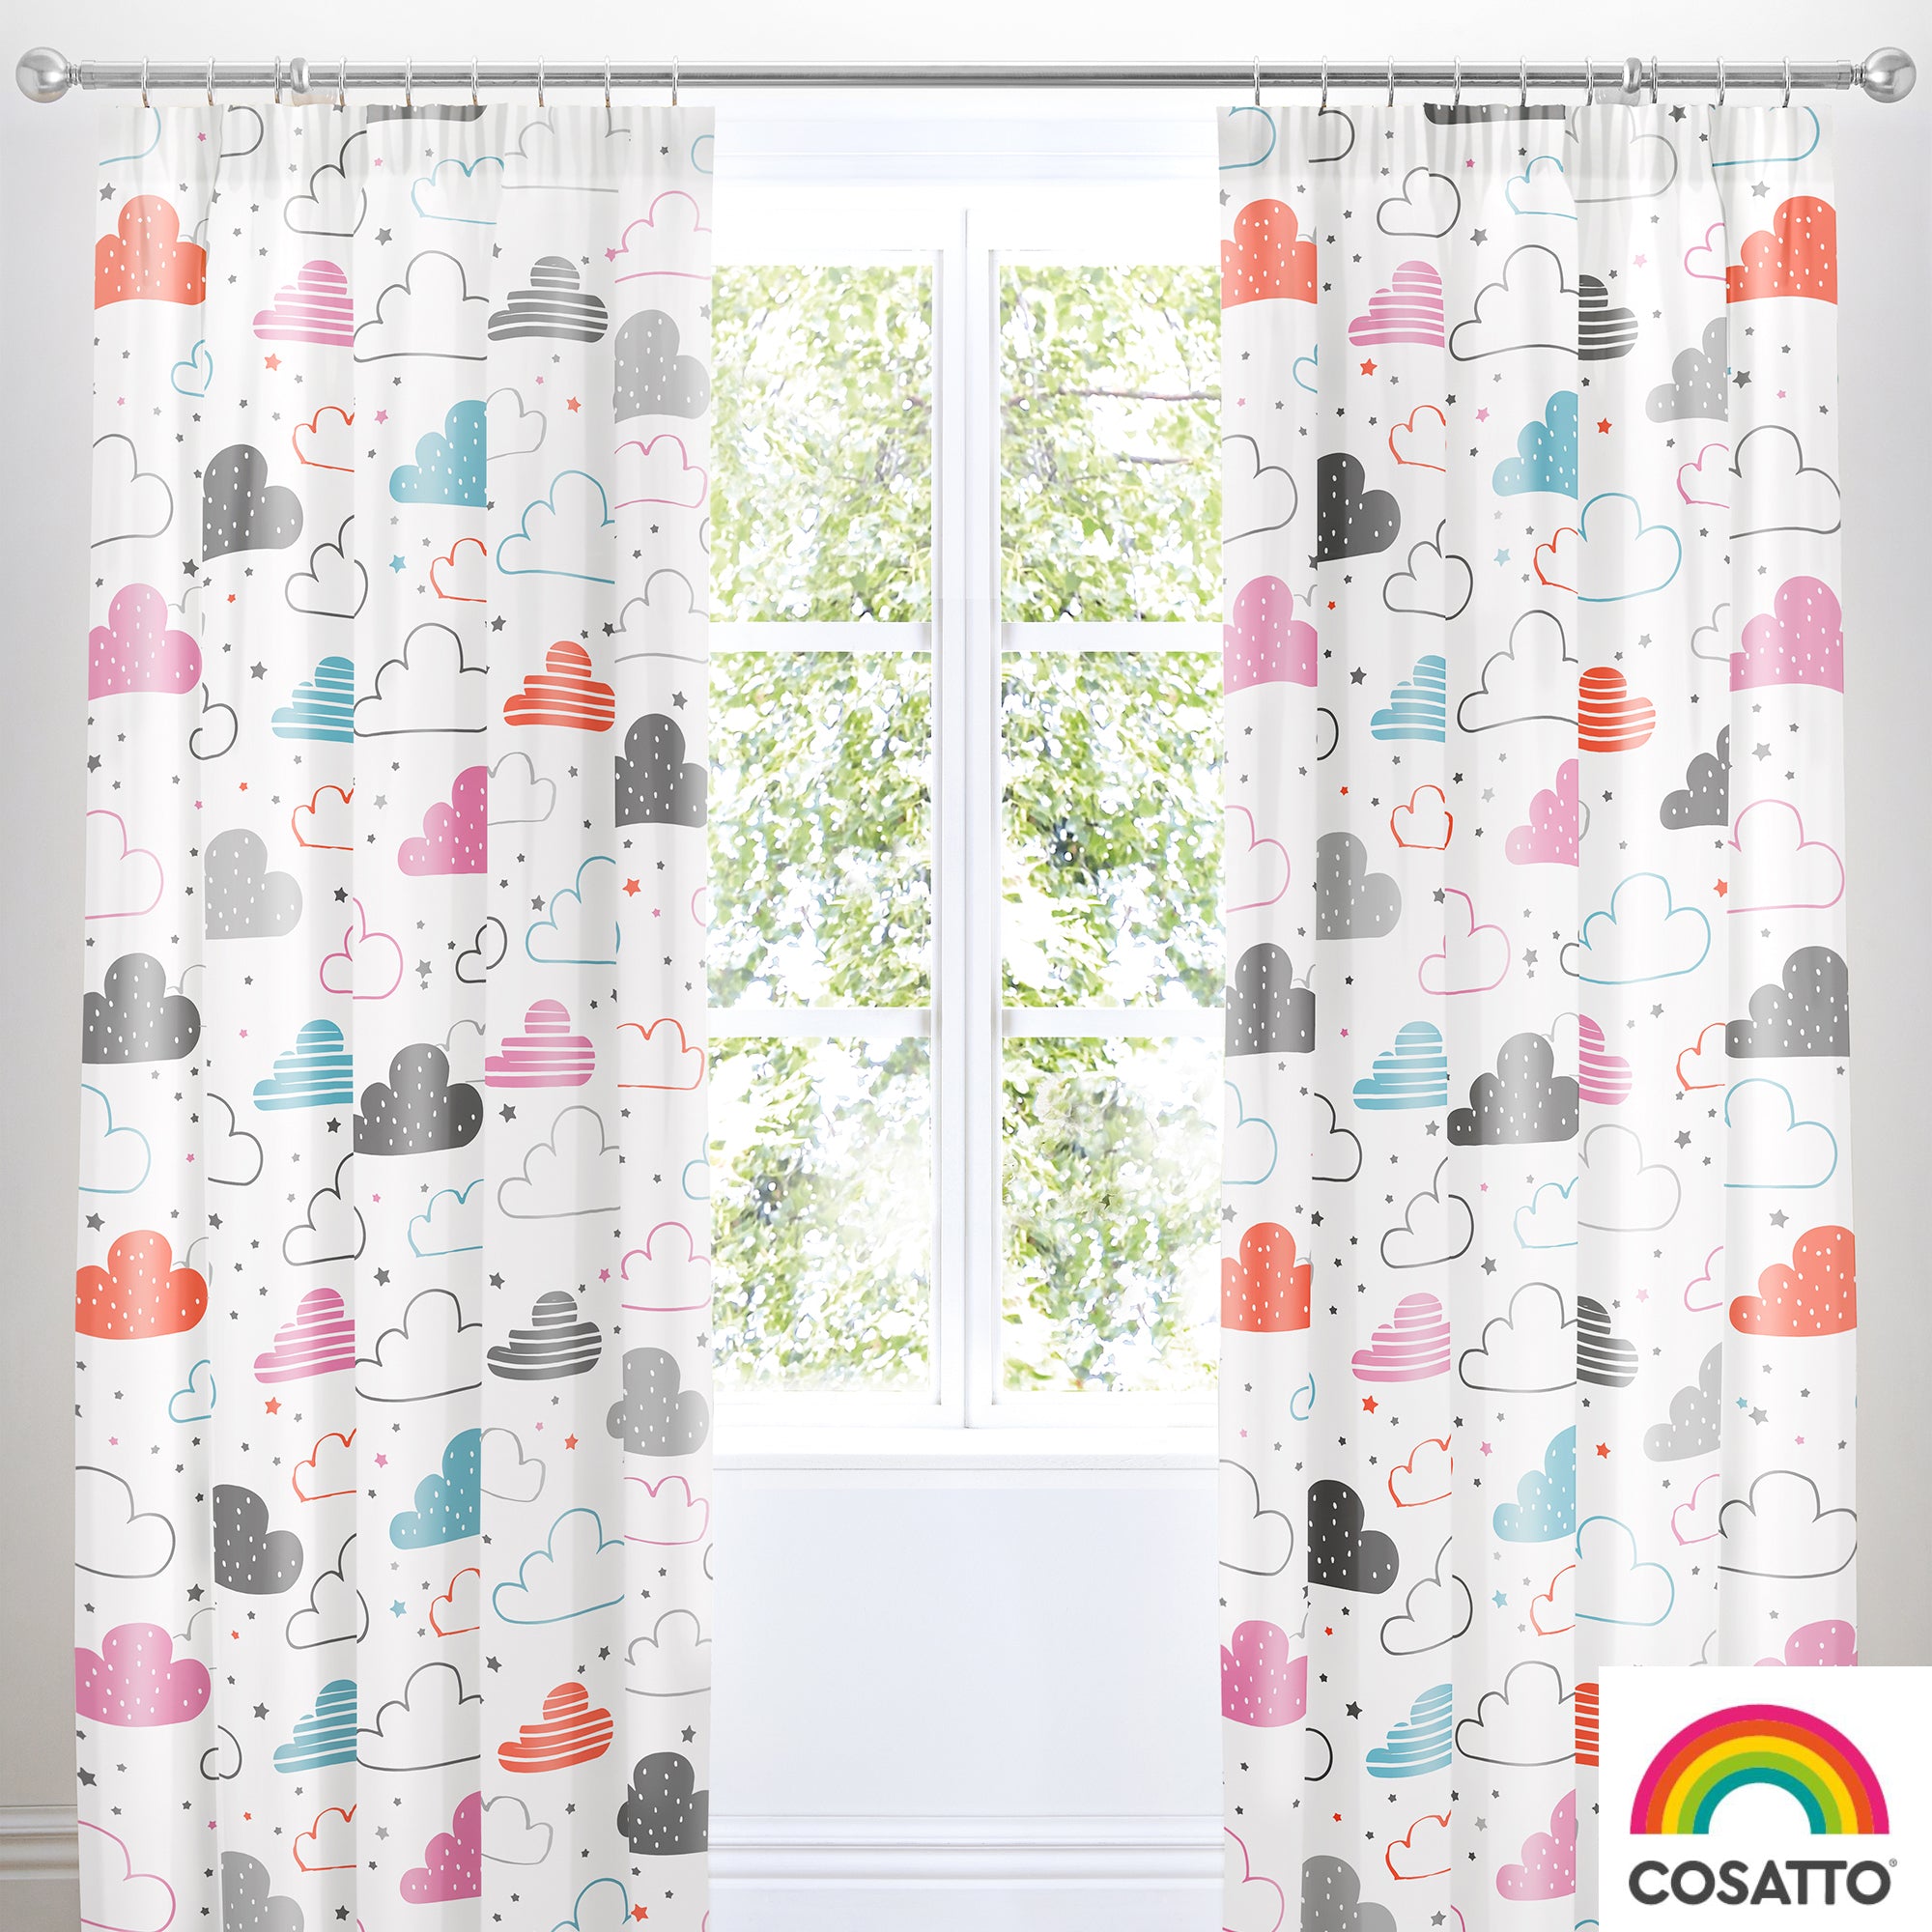 Fairy Clouds - 100% Cotton Duvet Set / Curtains - by Cosatto